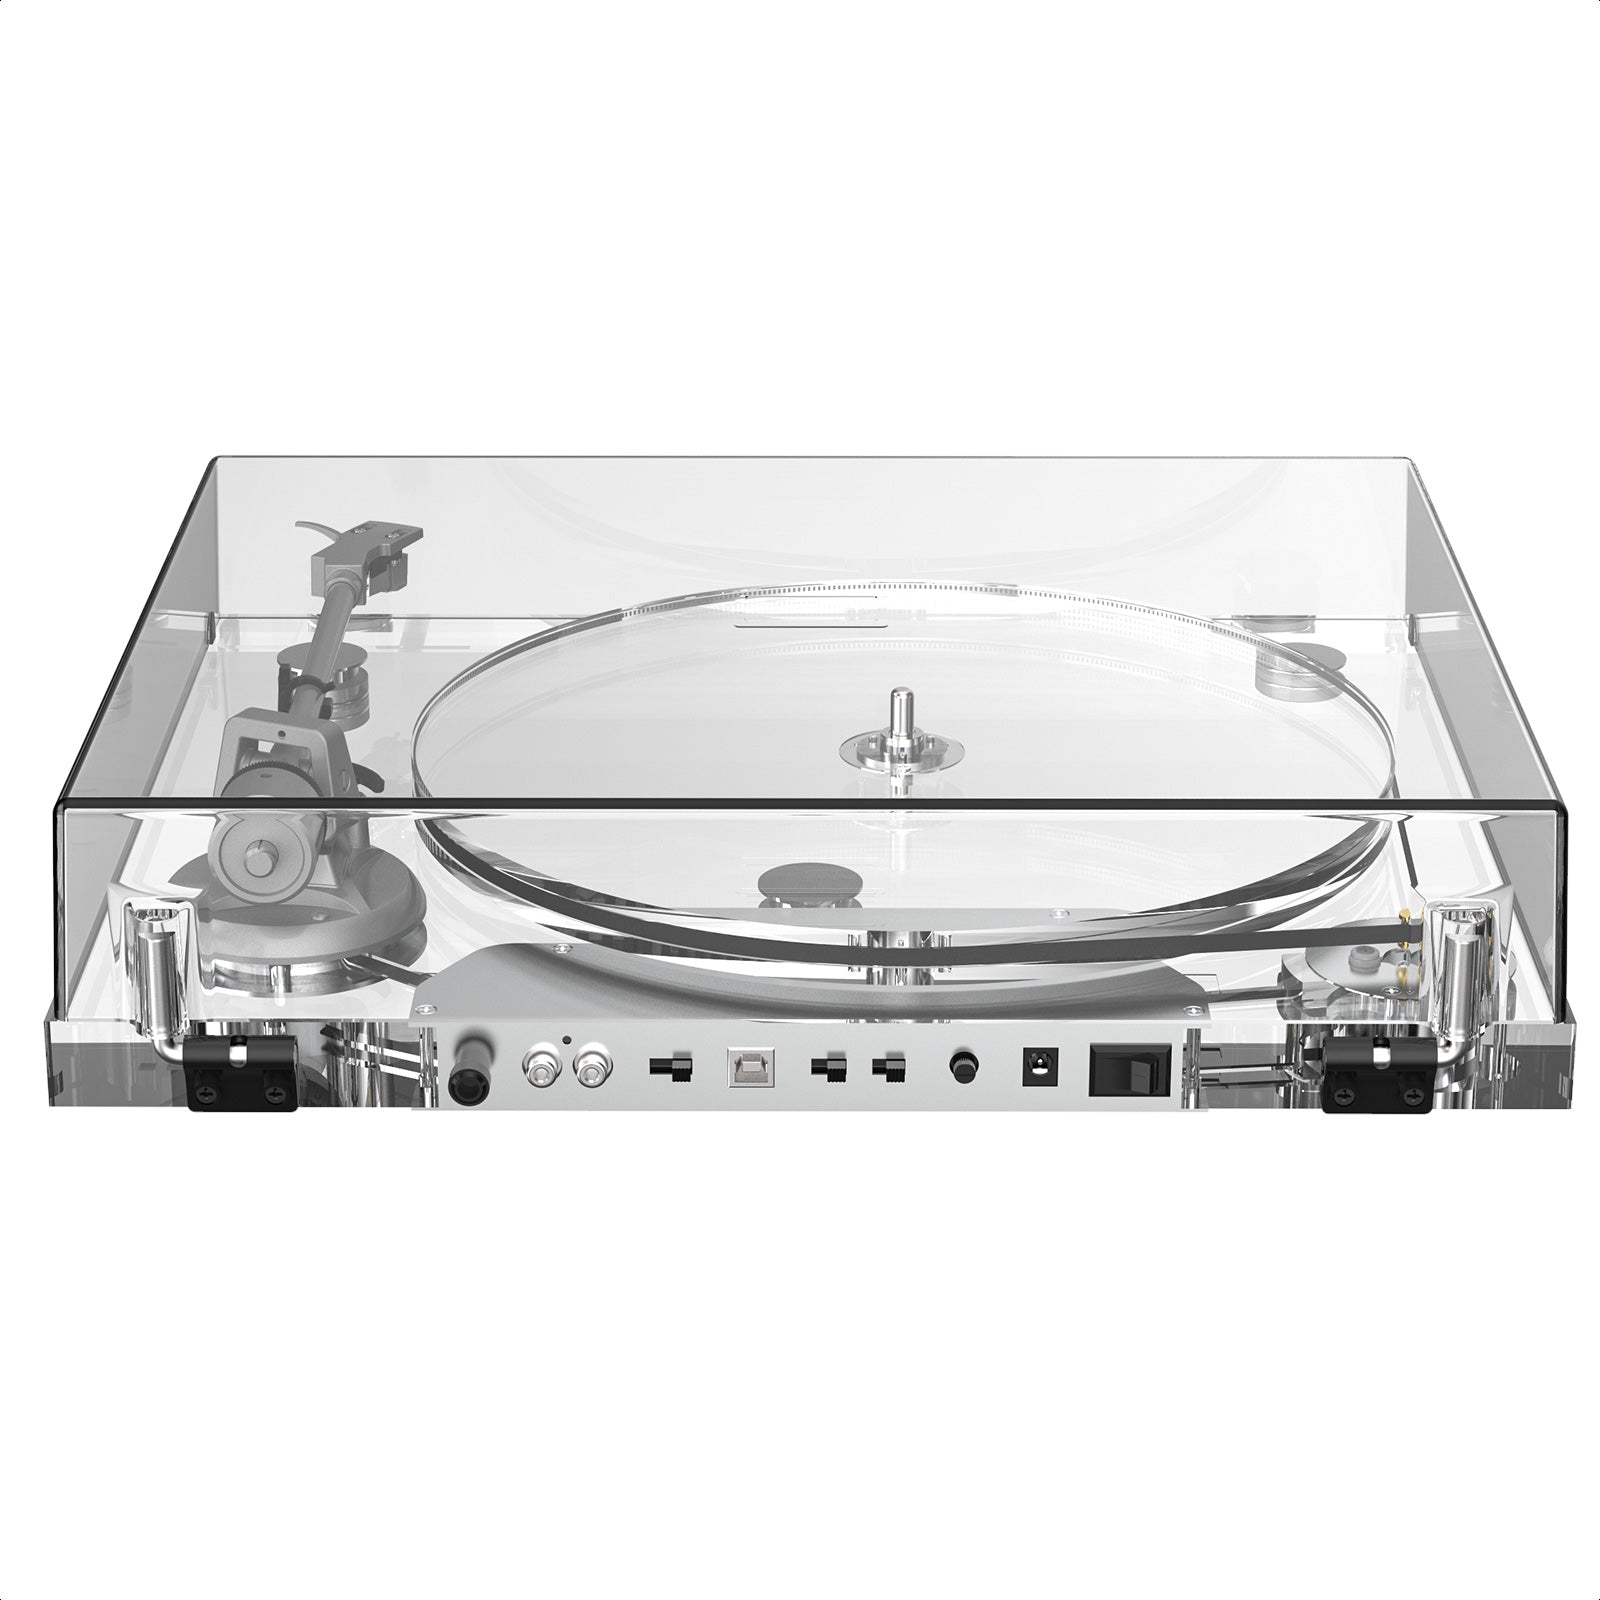 ICE1 the Full Acrylic High Fidelity Bluetooth Vinyl Turntable